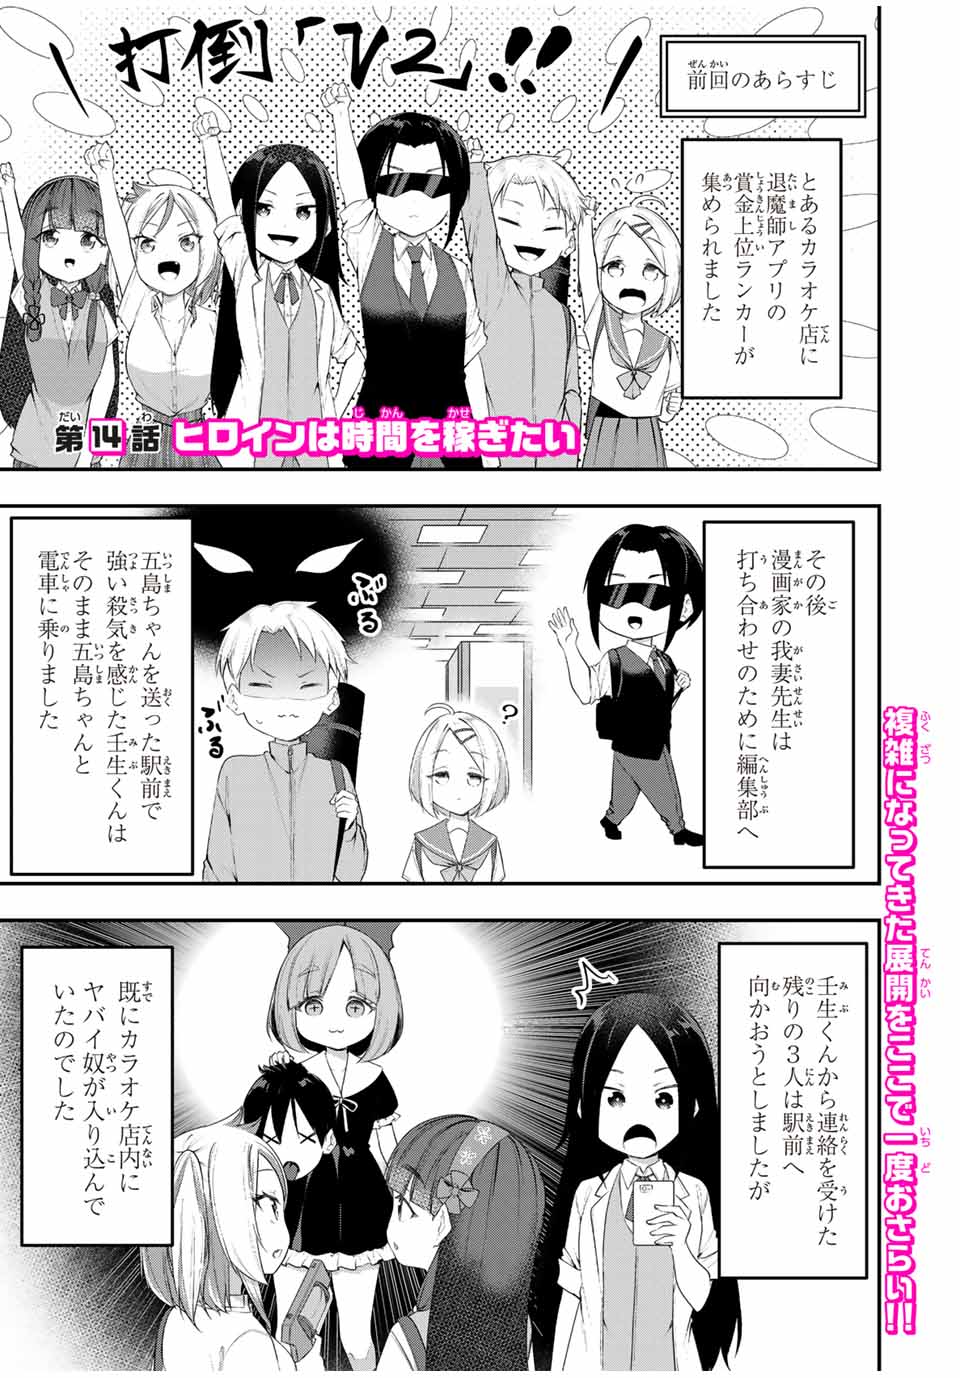 Heroine wa xx Okasegitai - Chapter 14 - Page 1